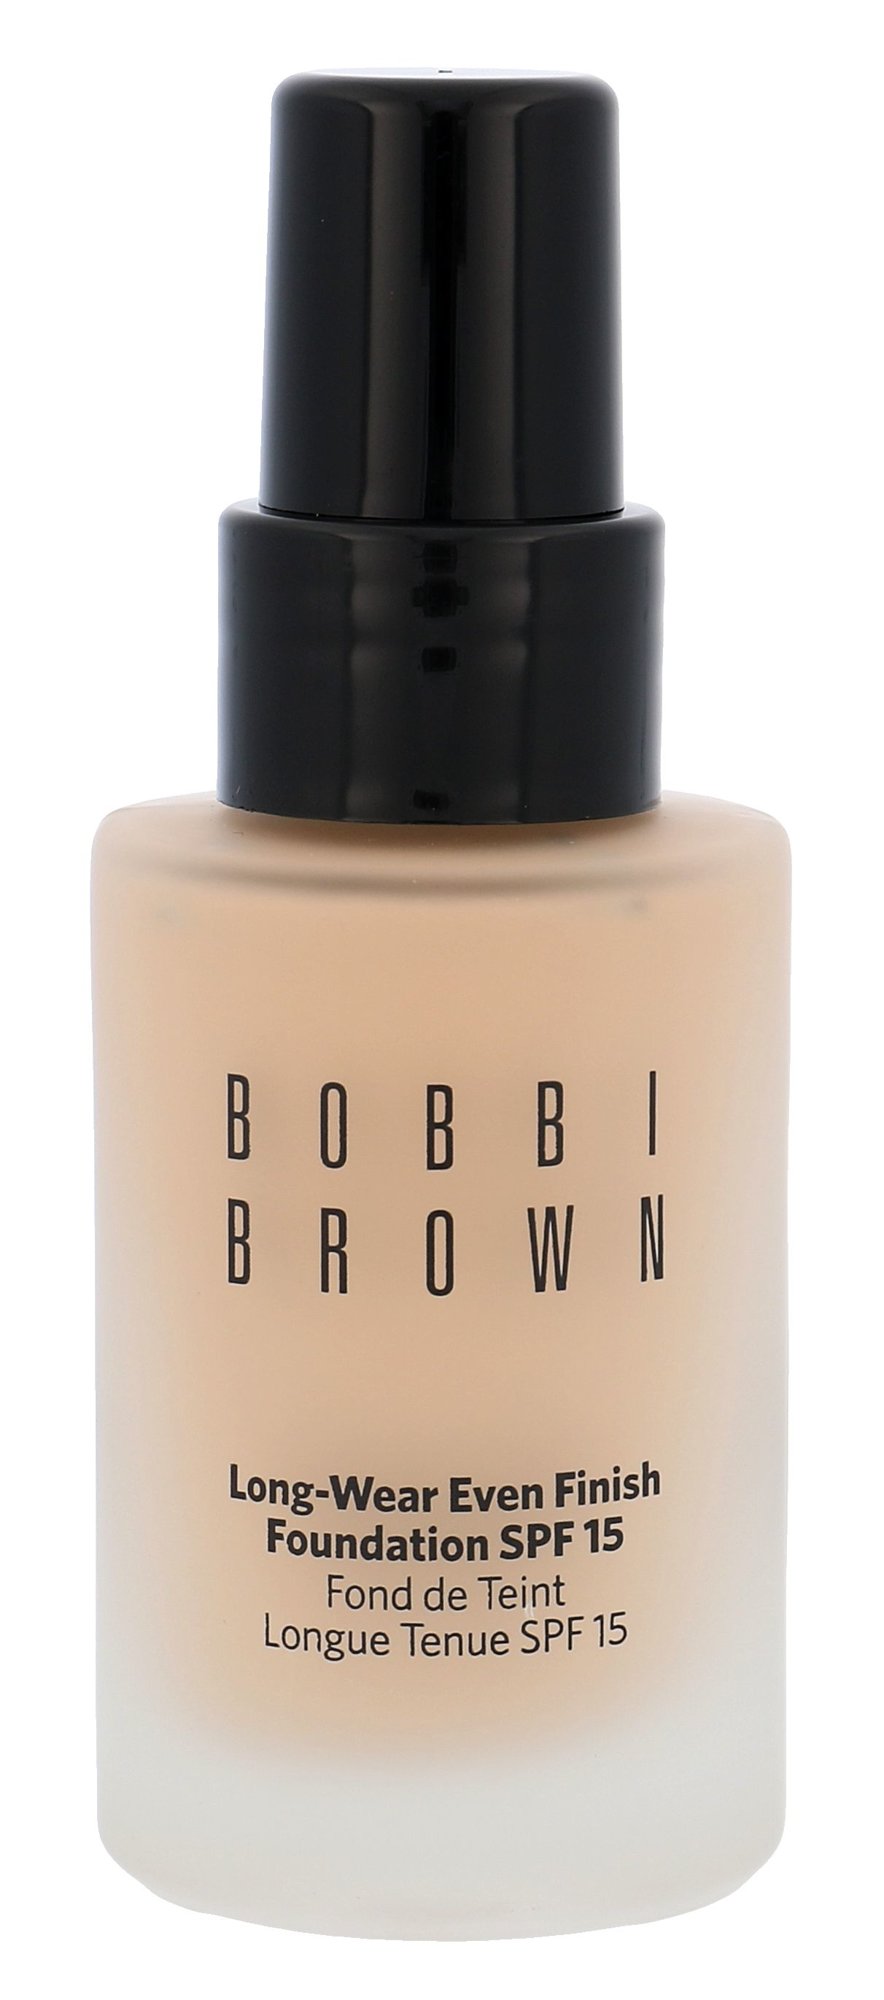 Bobbi Brown Long-Wear Even Finish Foundation SPF15